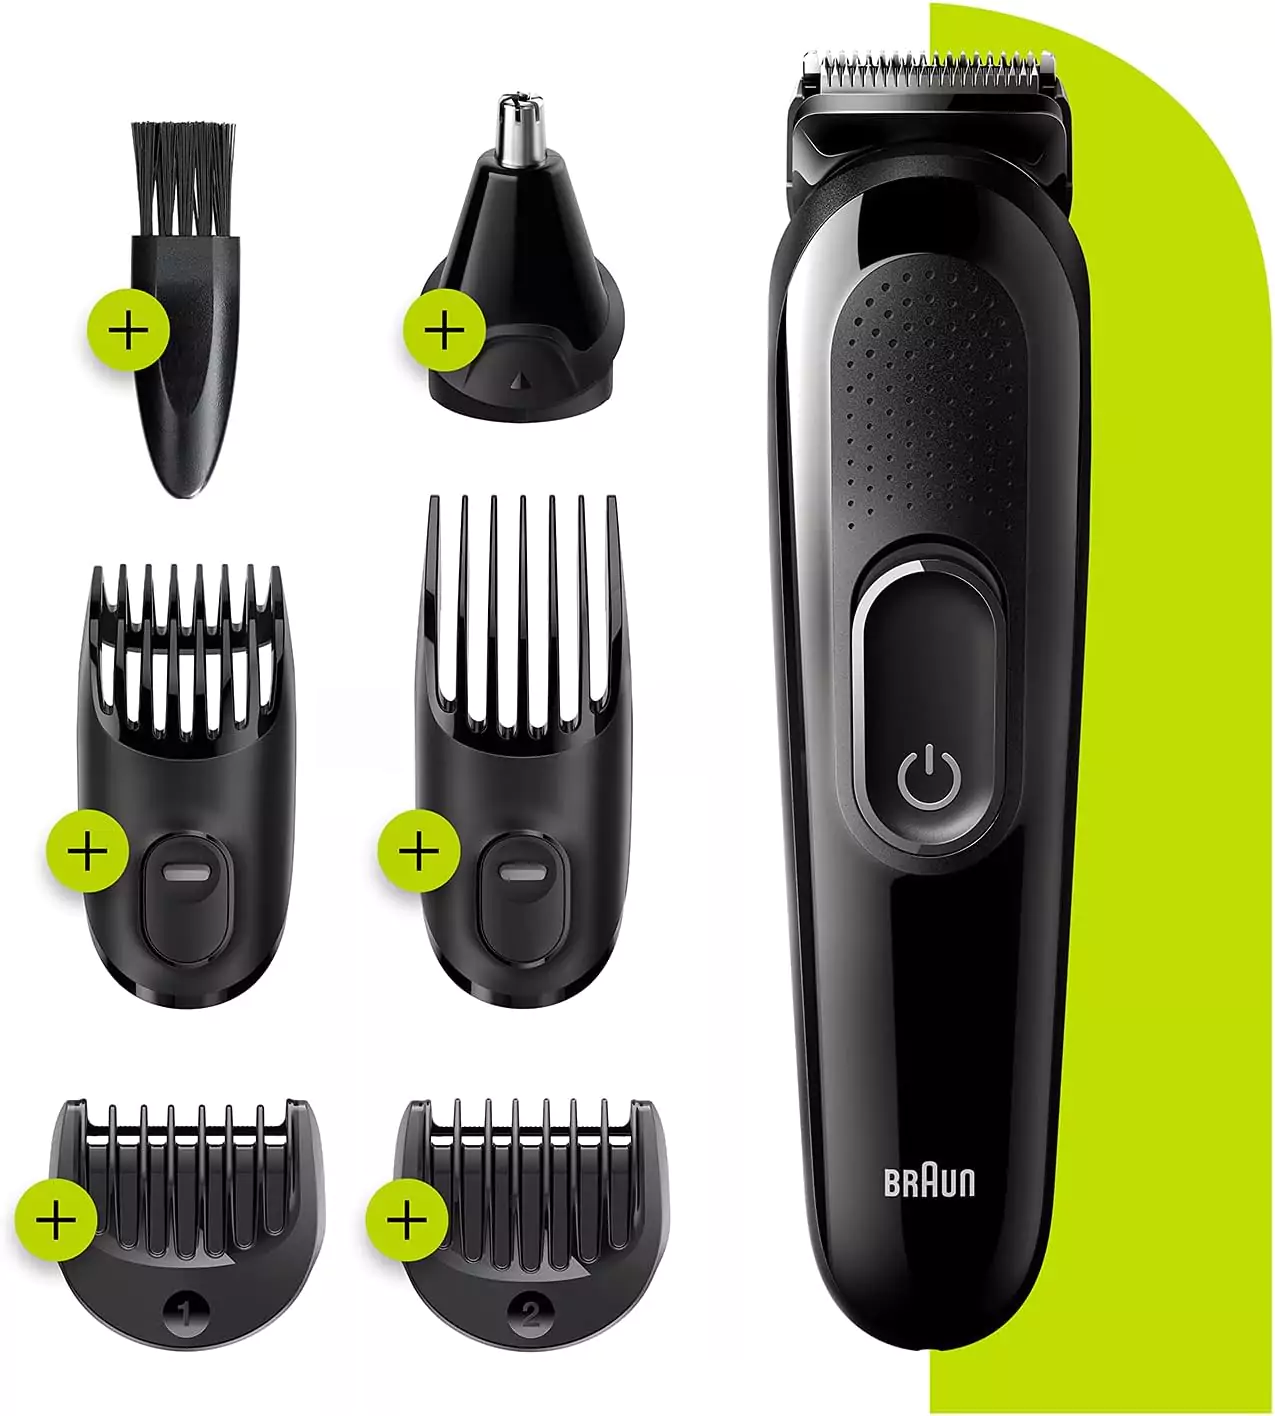 Braun MGK3220 6-in-1 Multifunctional Hair Trimmer, Black